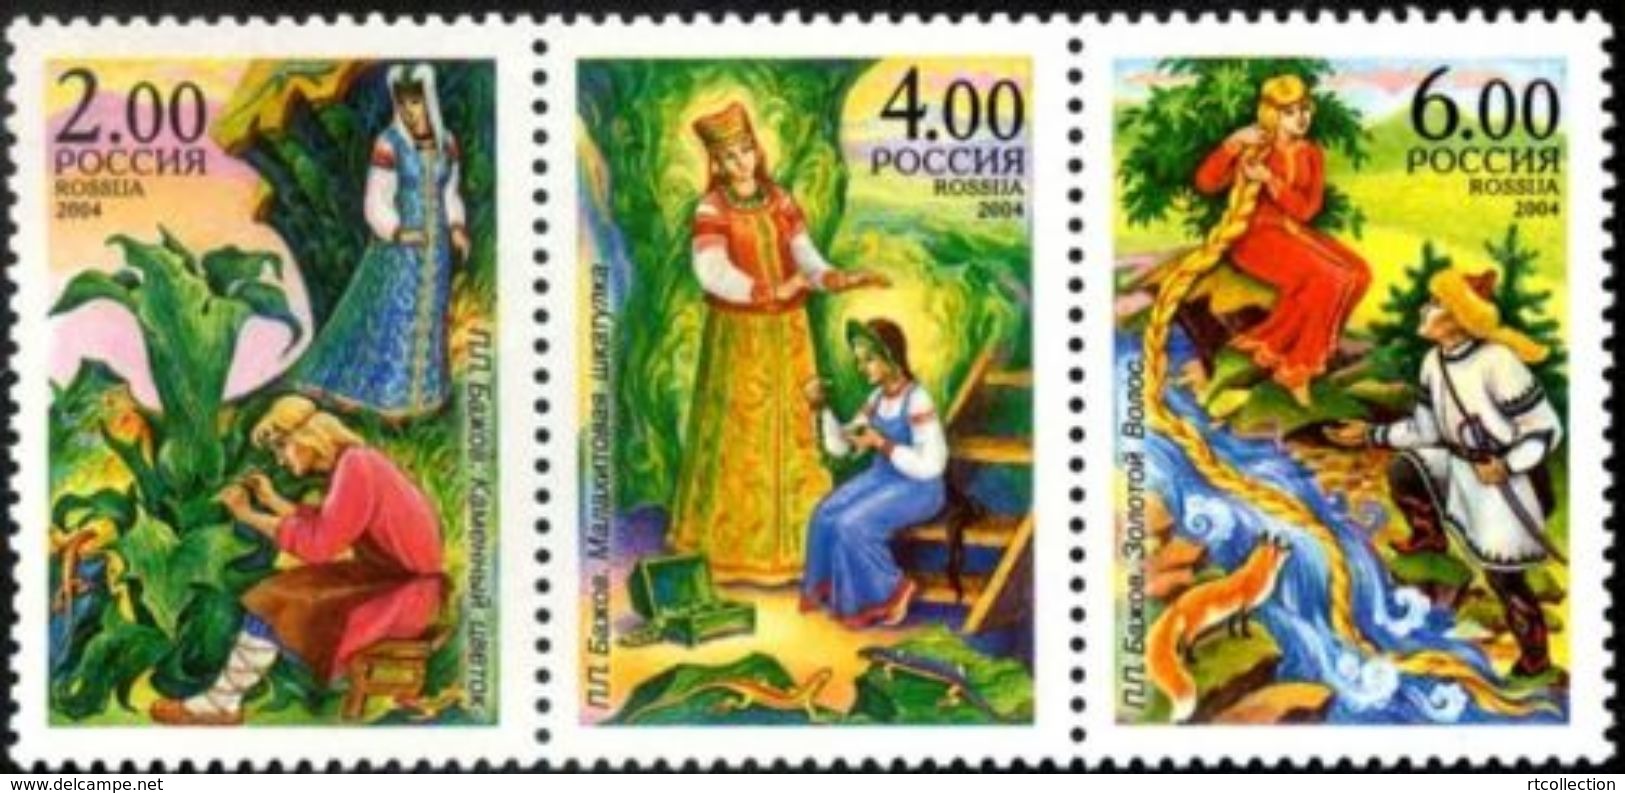 Russia 2004 125th Birth Anni P.P. Bazhov Fairy Tales Writer ART Malachite Box Golden Hair Strip Stamps MNH SC 6815 - Fairy Tales, Popular Stories & Legends